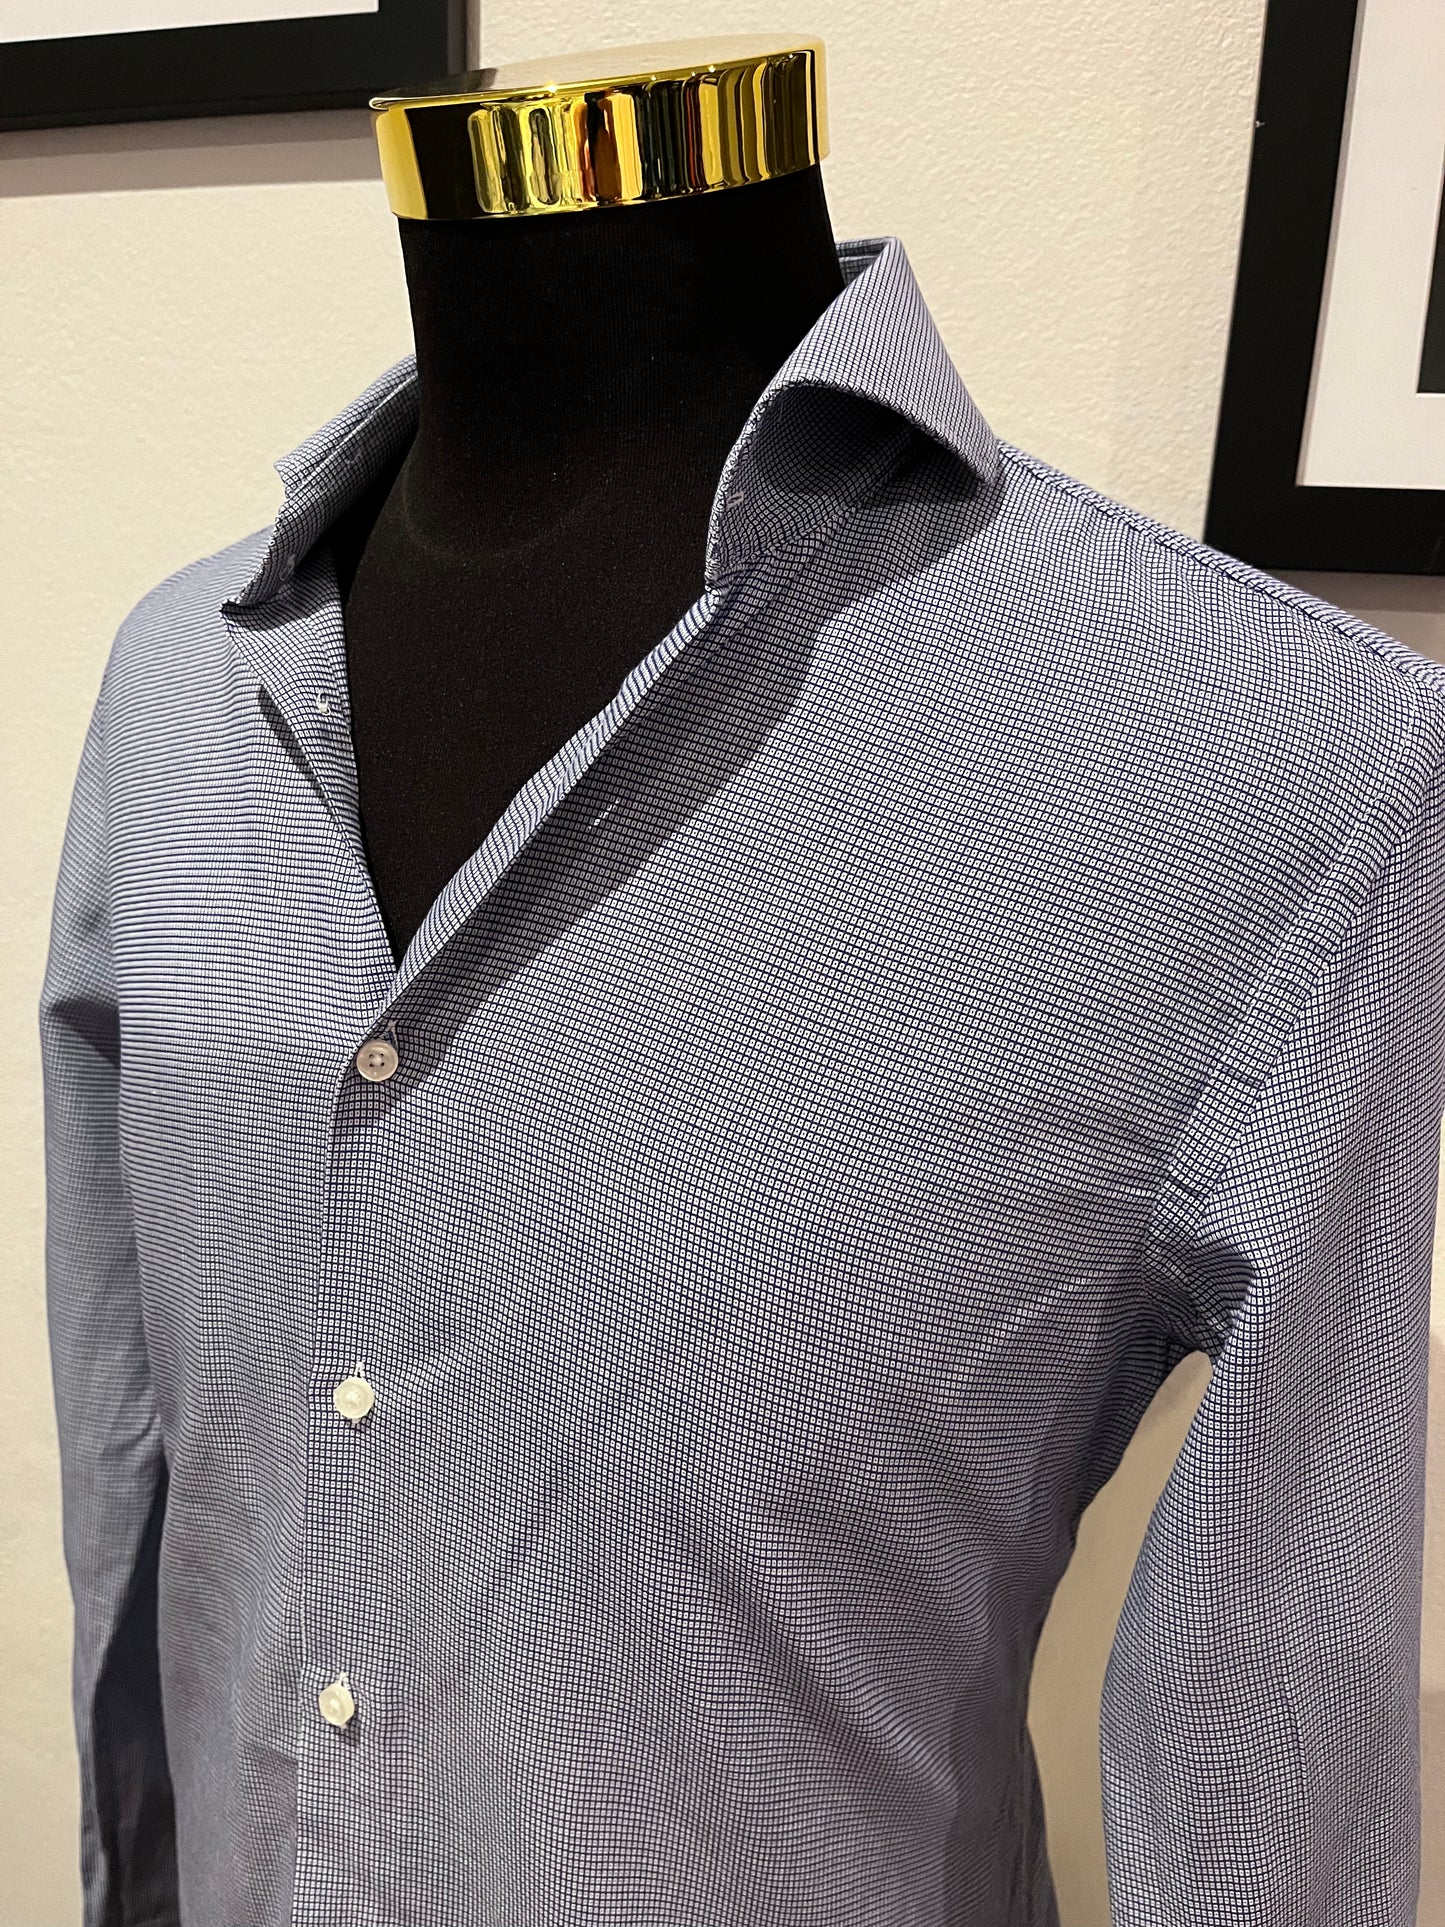 Boss Hugo Boss Italian Fabric 100% Cotton Blue Shirt Size Medium